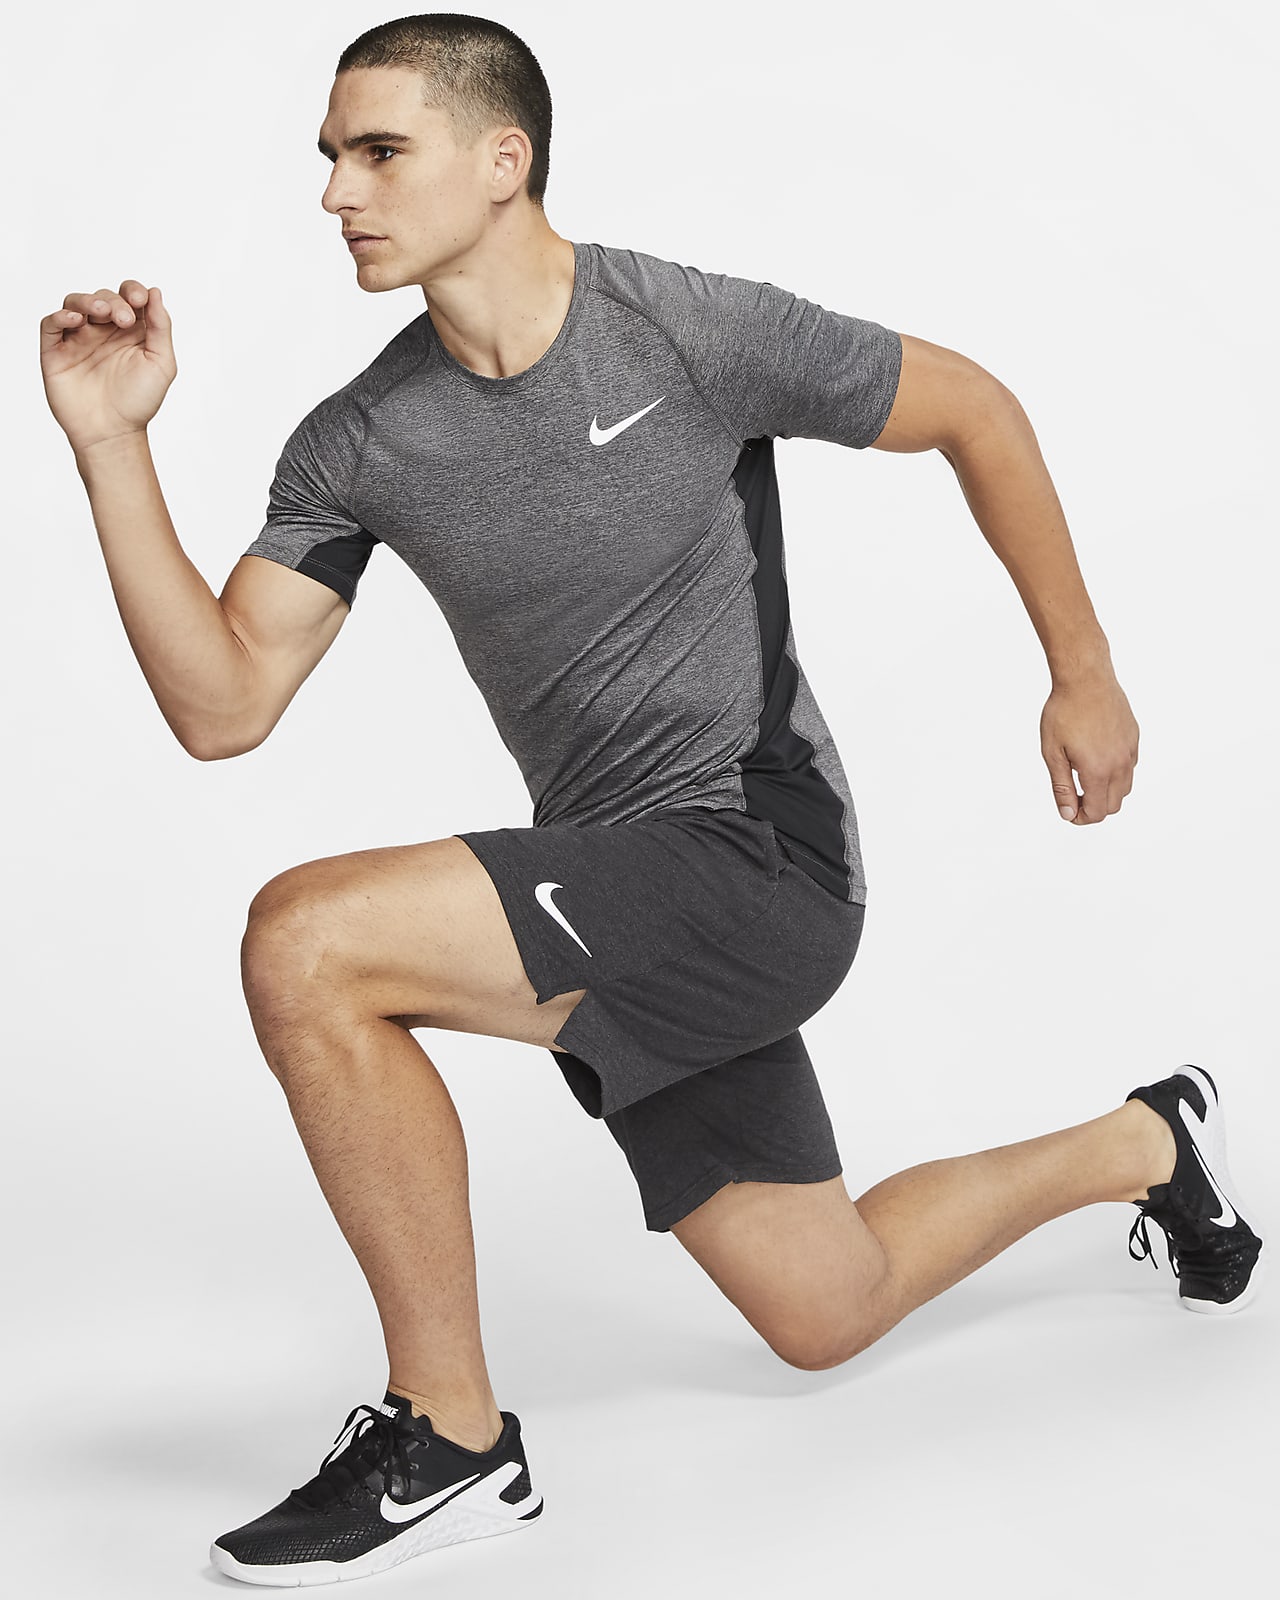 Take-up Novelist Make Nike Dri-FIT Men's Training Shorts. Nike LU